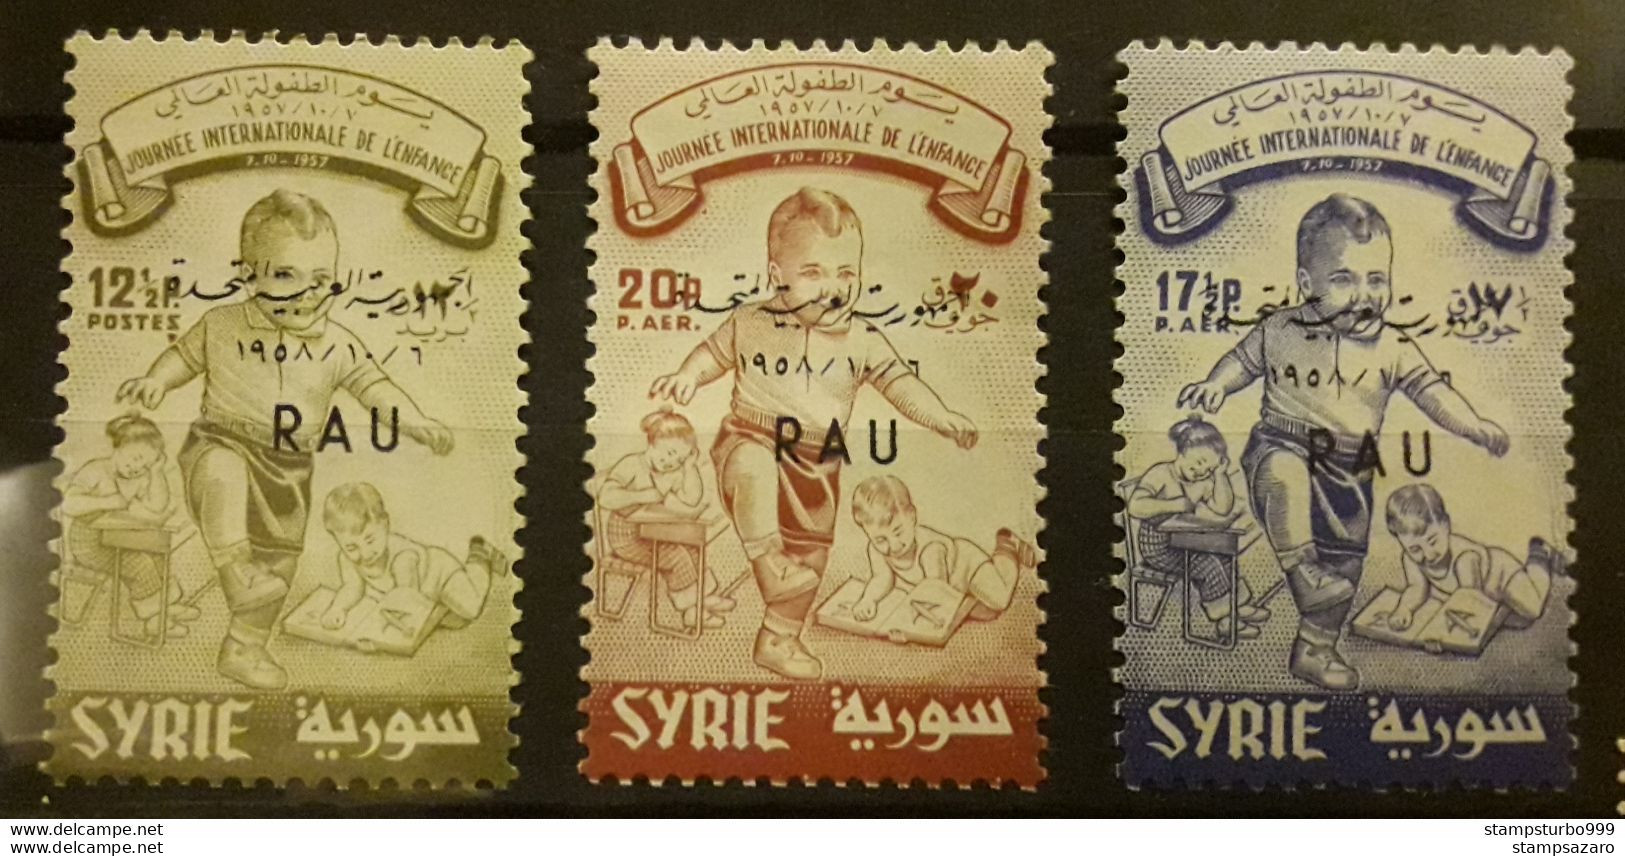 Syrie, Syrien, Syria 1958 RAU Childrens Day Surch. Set , Rare, MNH ** - Siria